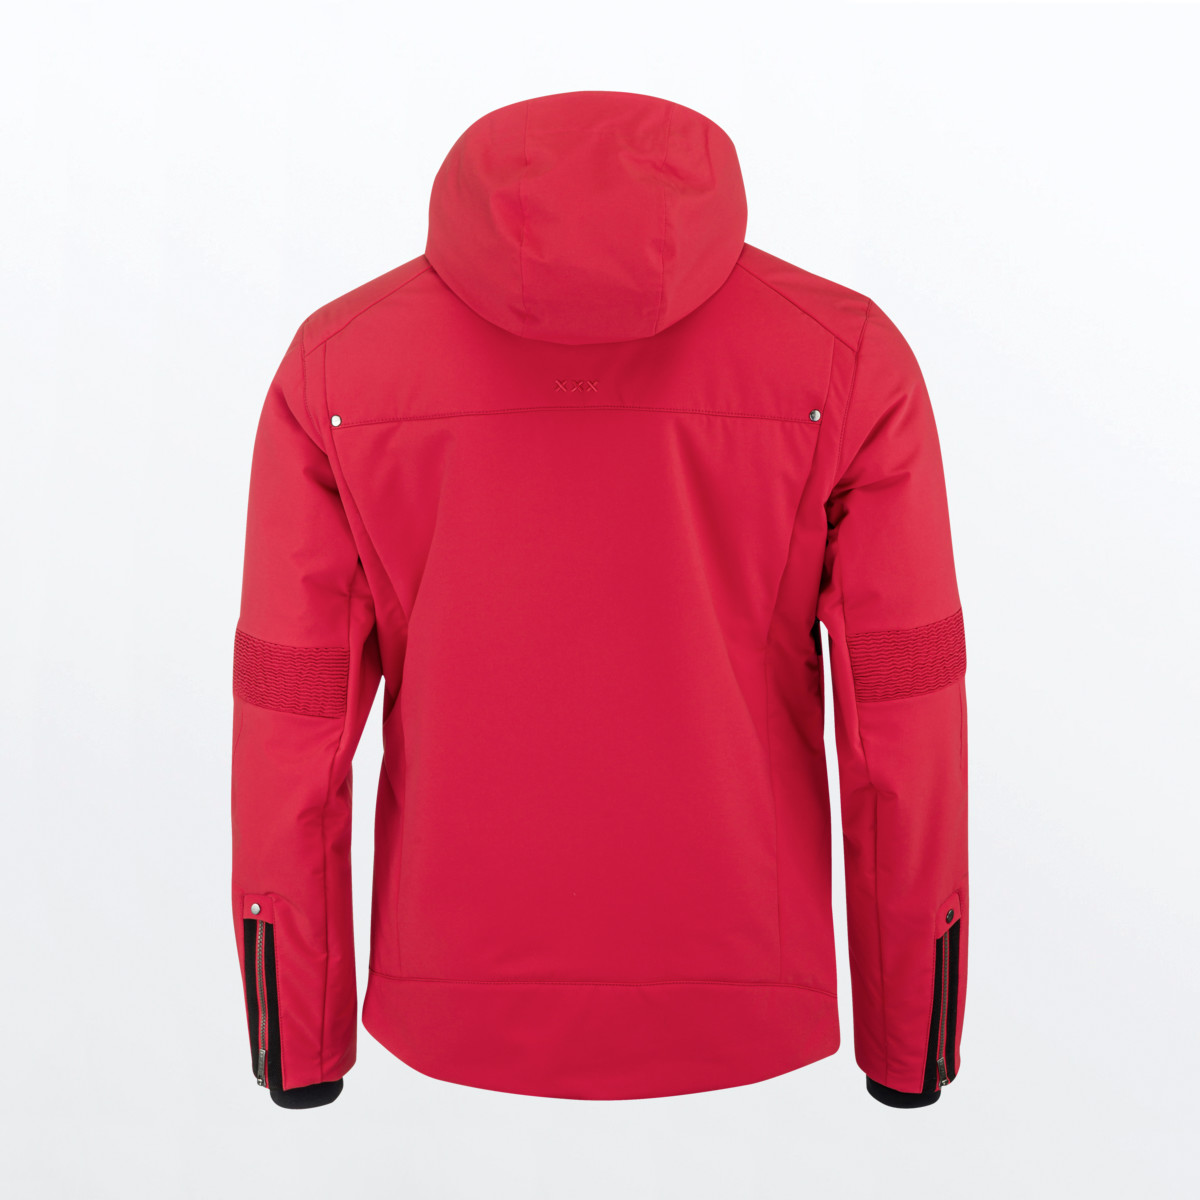 Куртка горнолыжная Head 21-22 Rebels Adventure Jacket M RD, цвет красный, размер L 821851 - фото 2